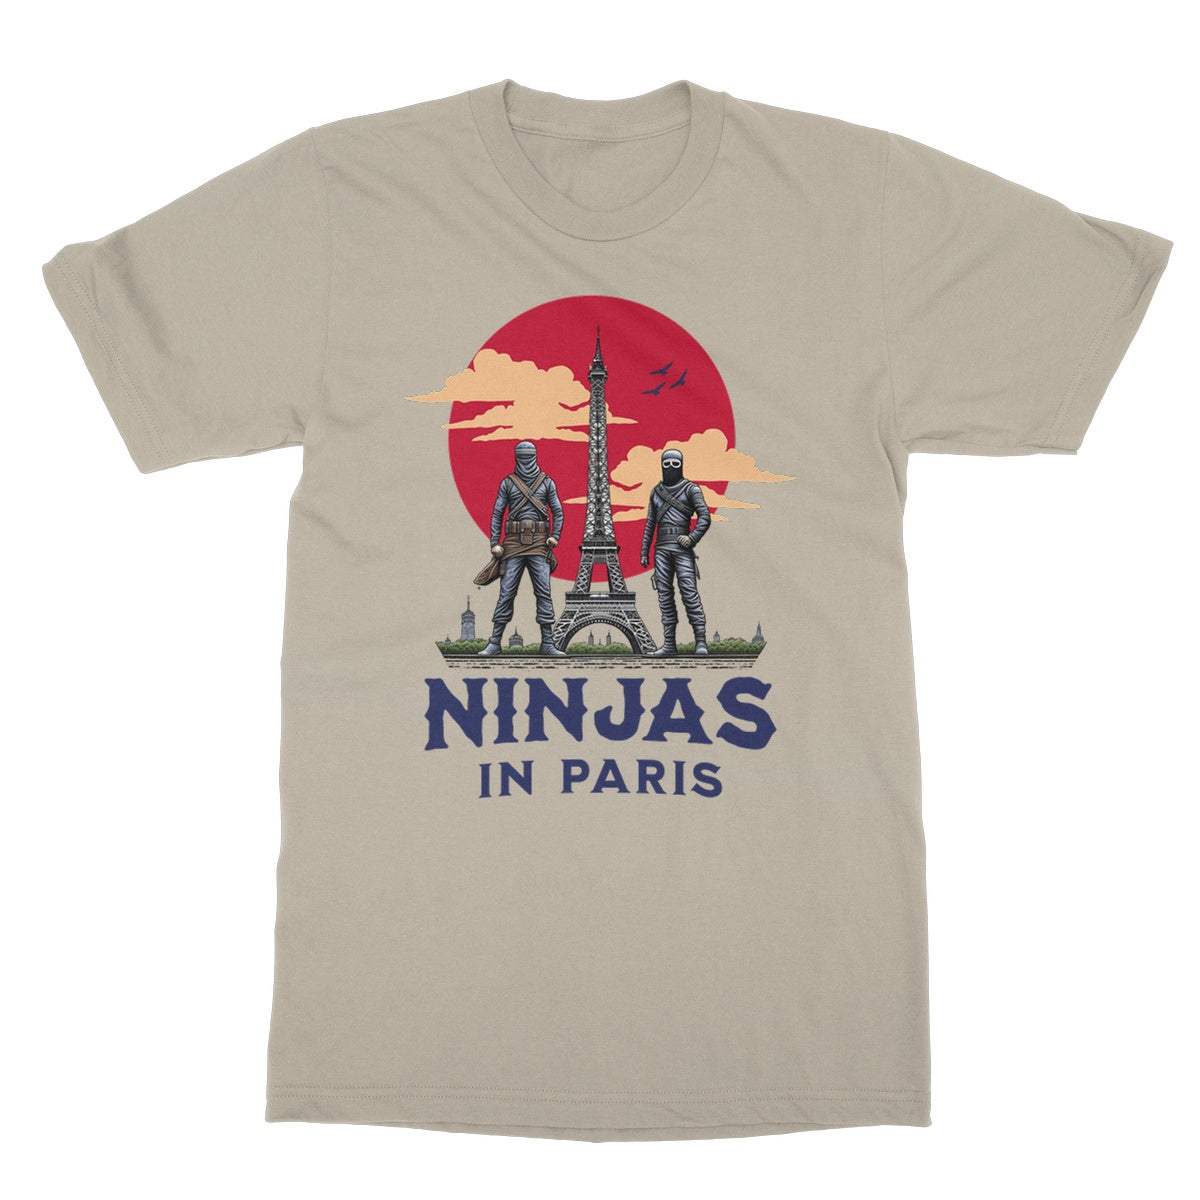 ninjas in paris t shirt sand